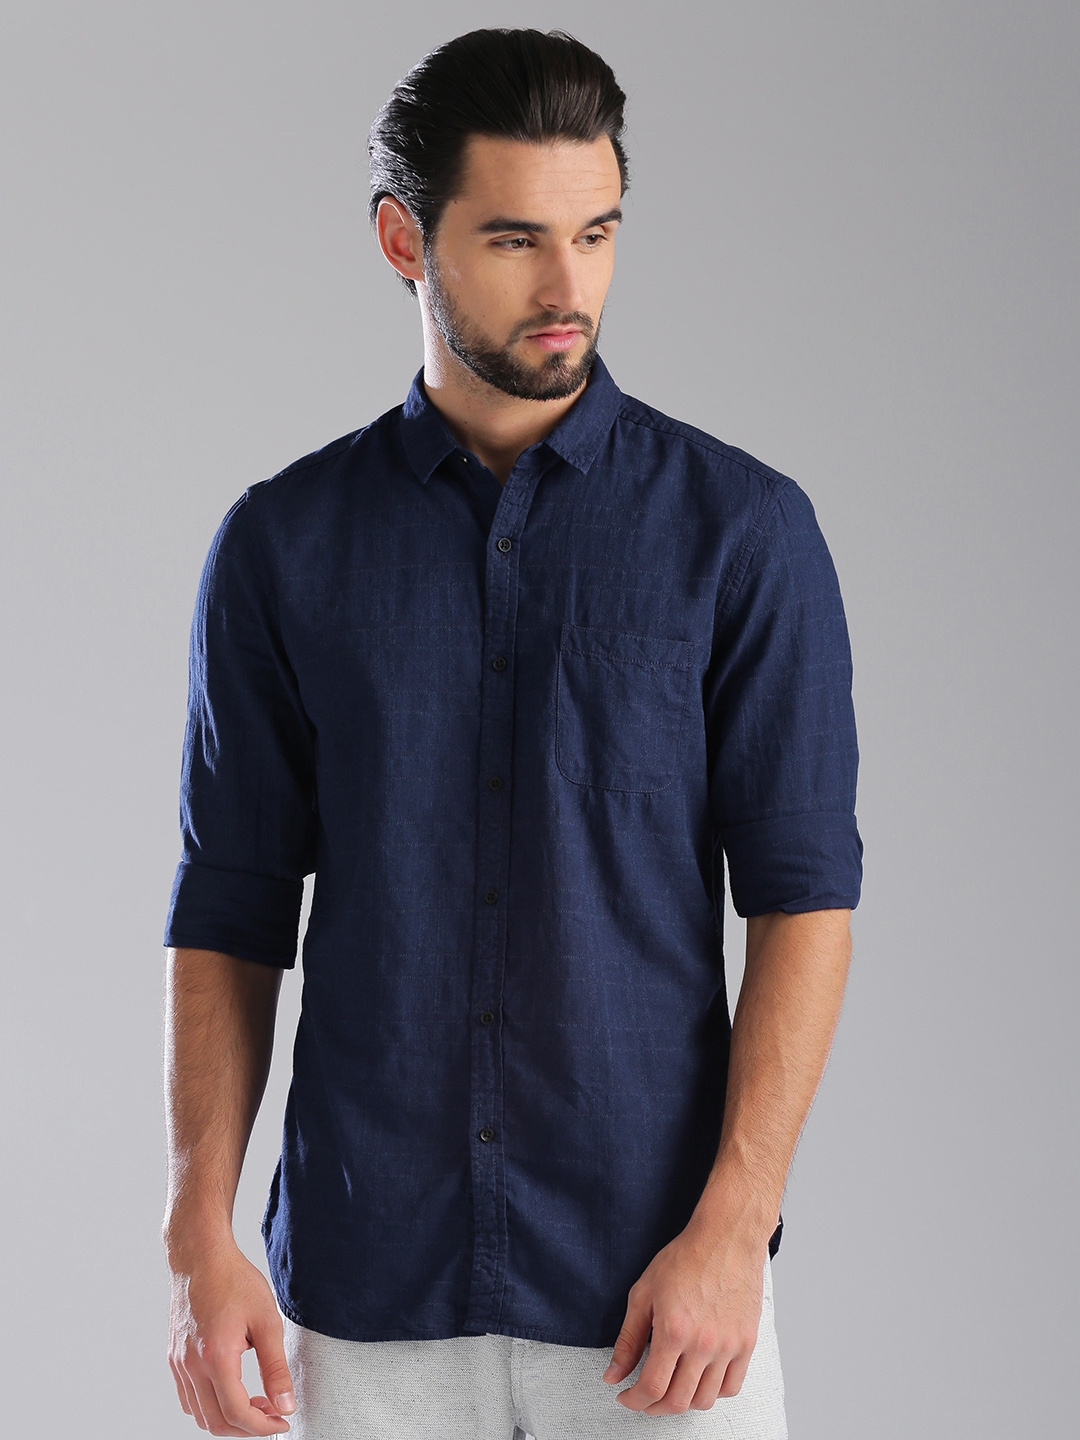 Buy Bossini Men Navy Blue Slim Fit Solid Casual Shirt - Shirts for Men ...